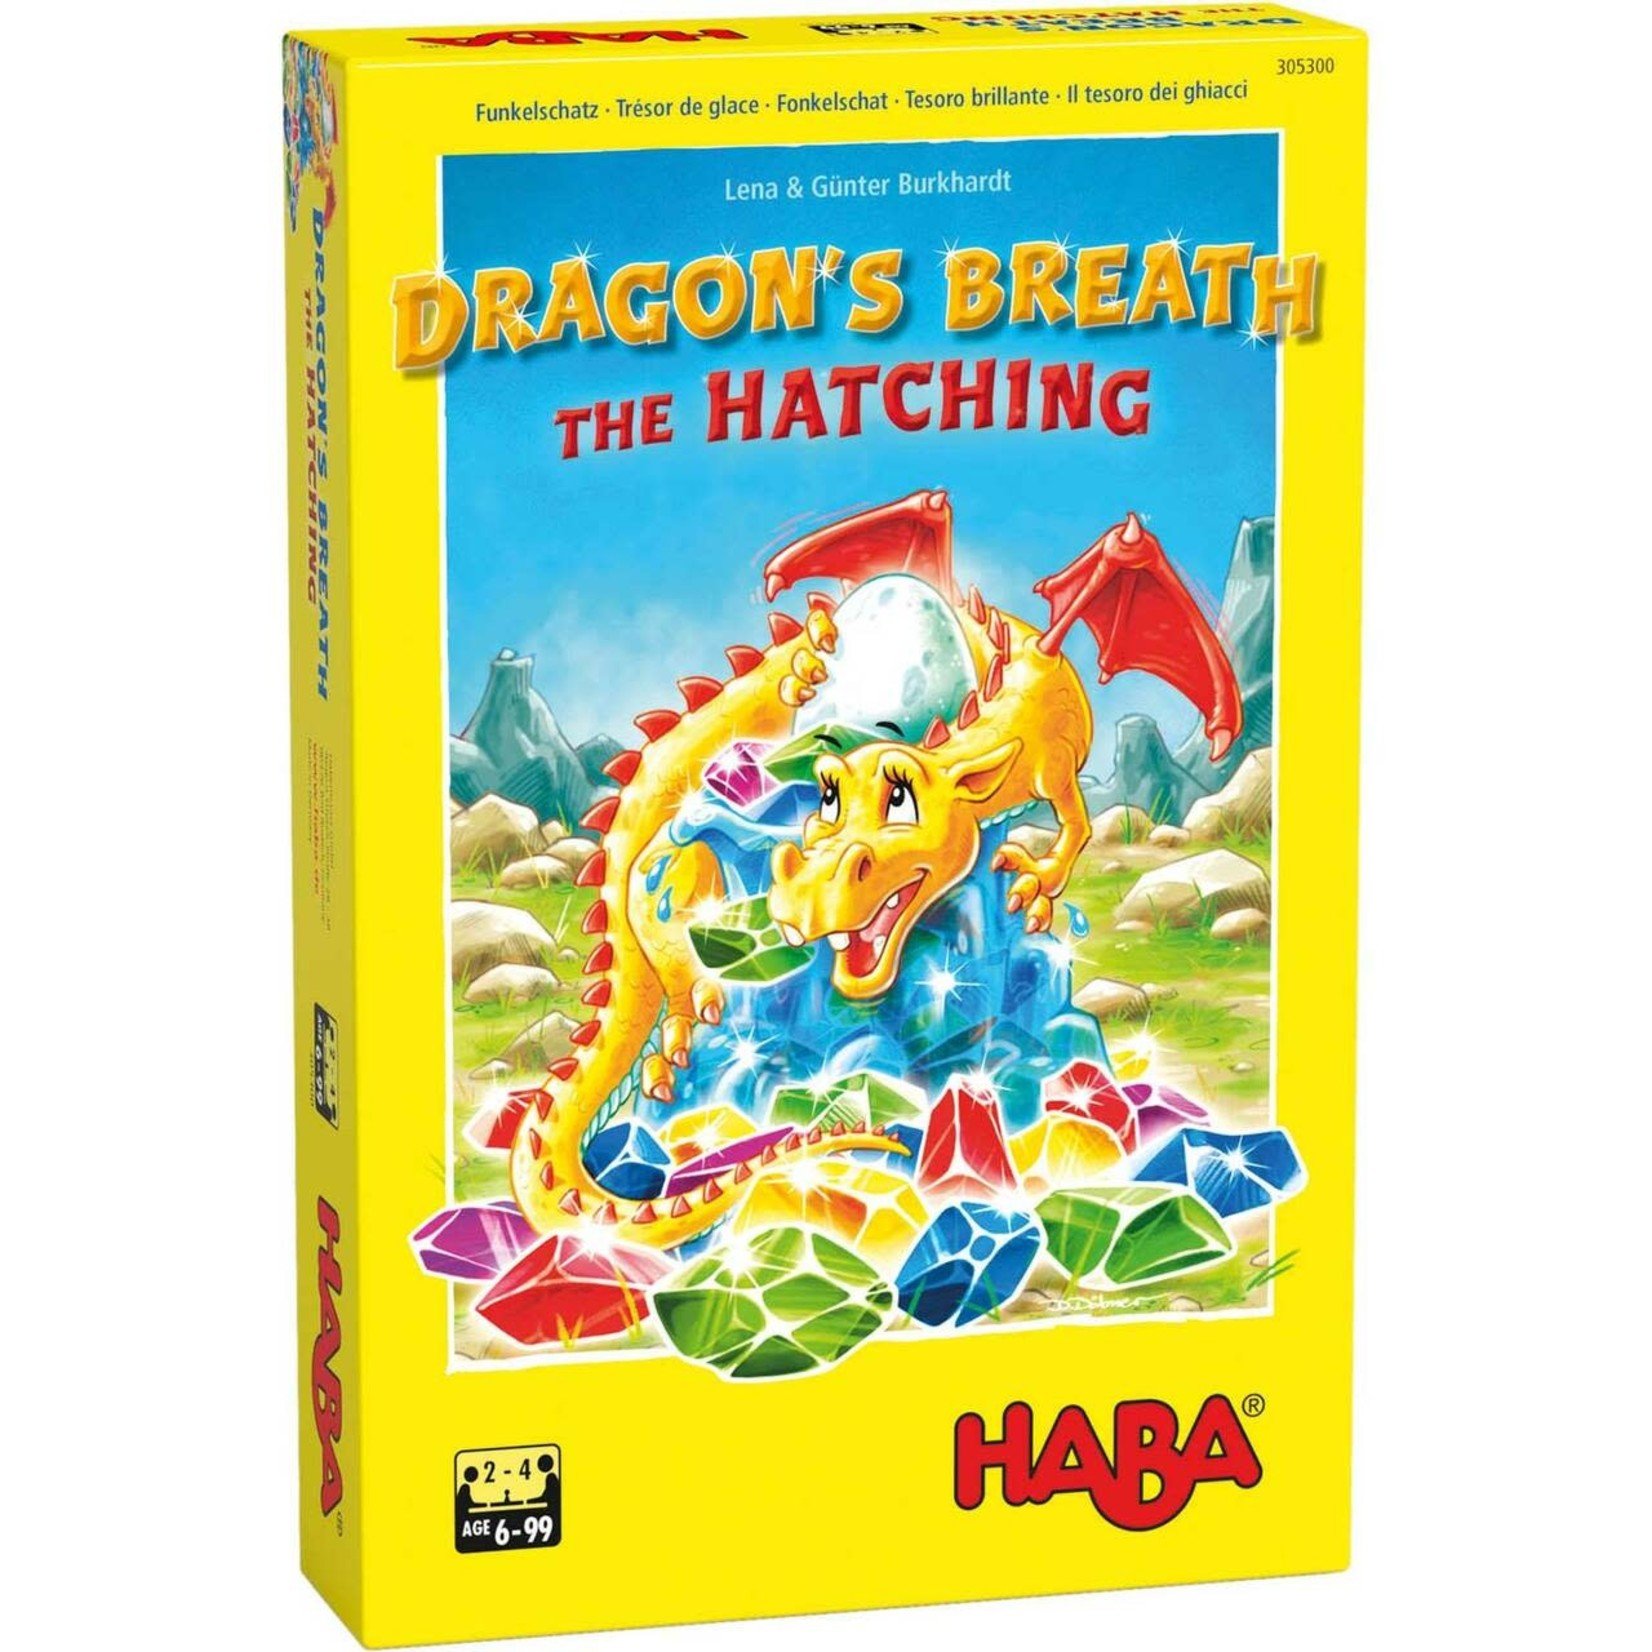 HABA HABA Dragon's Breath The Hatching